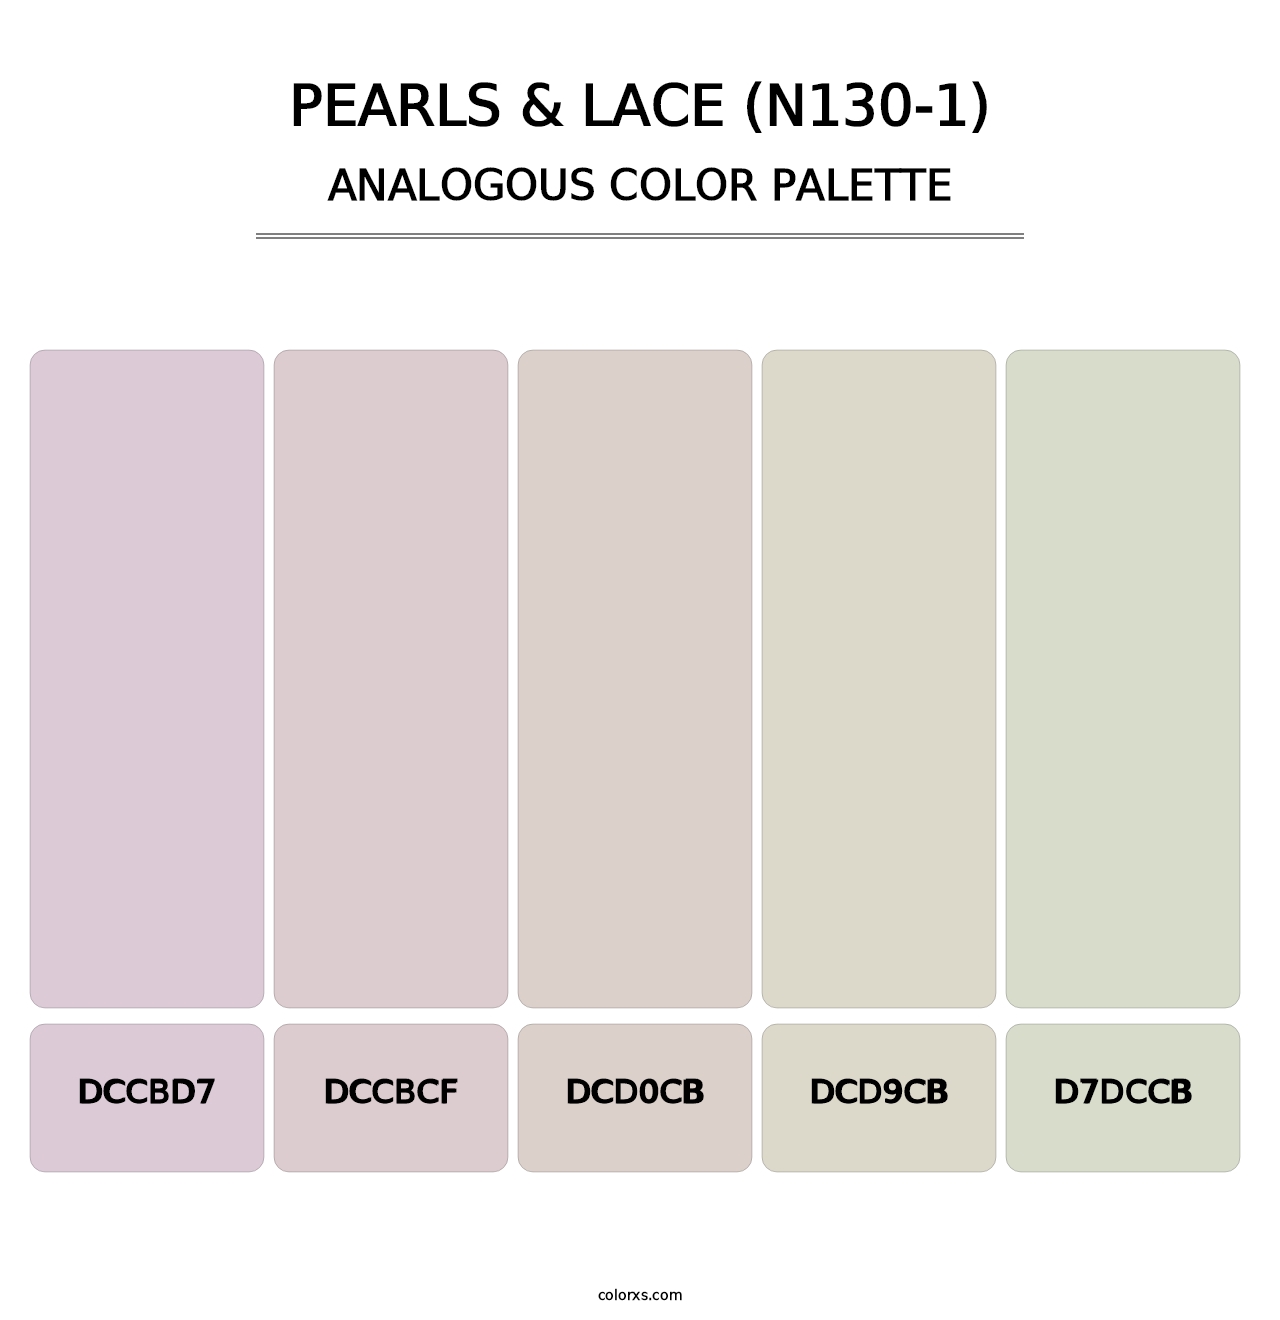 Pearls & Lace (N130-1) - Analogous Color Palette